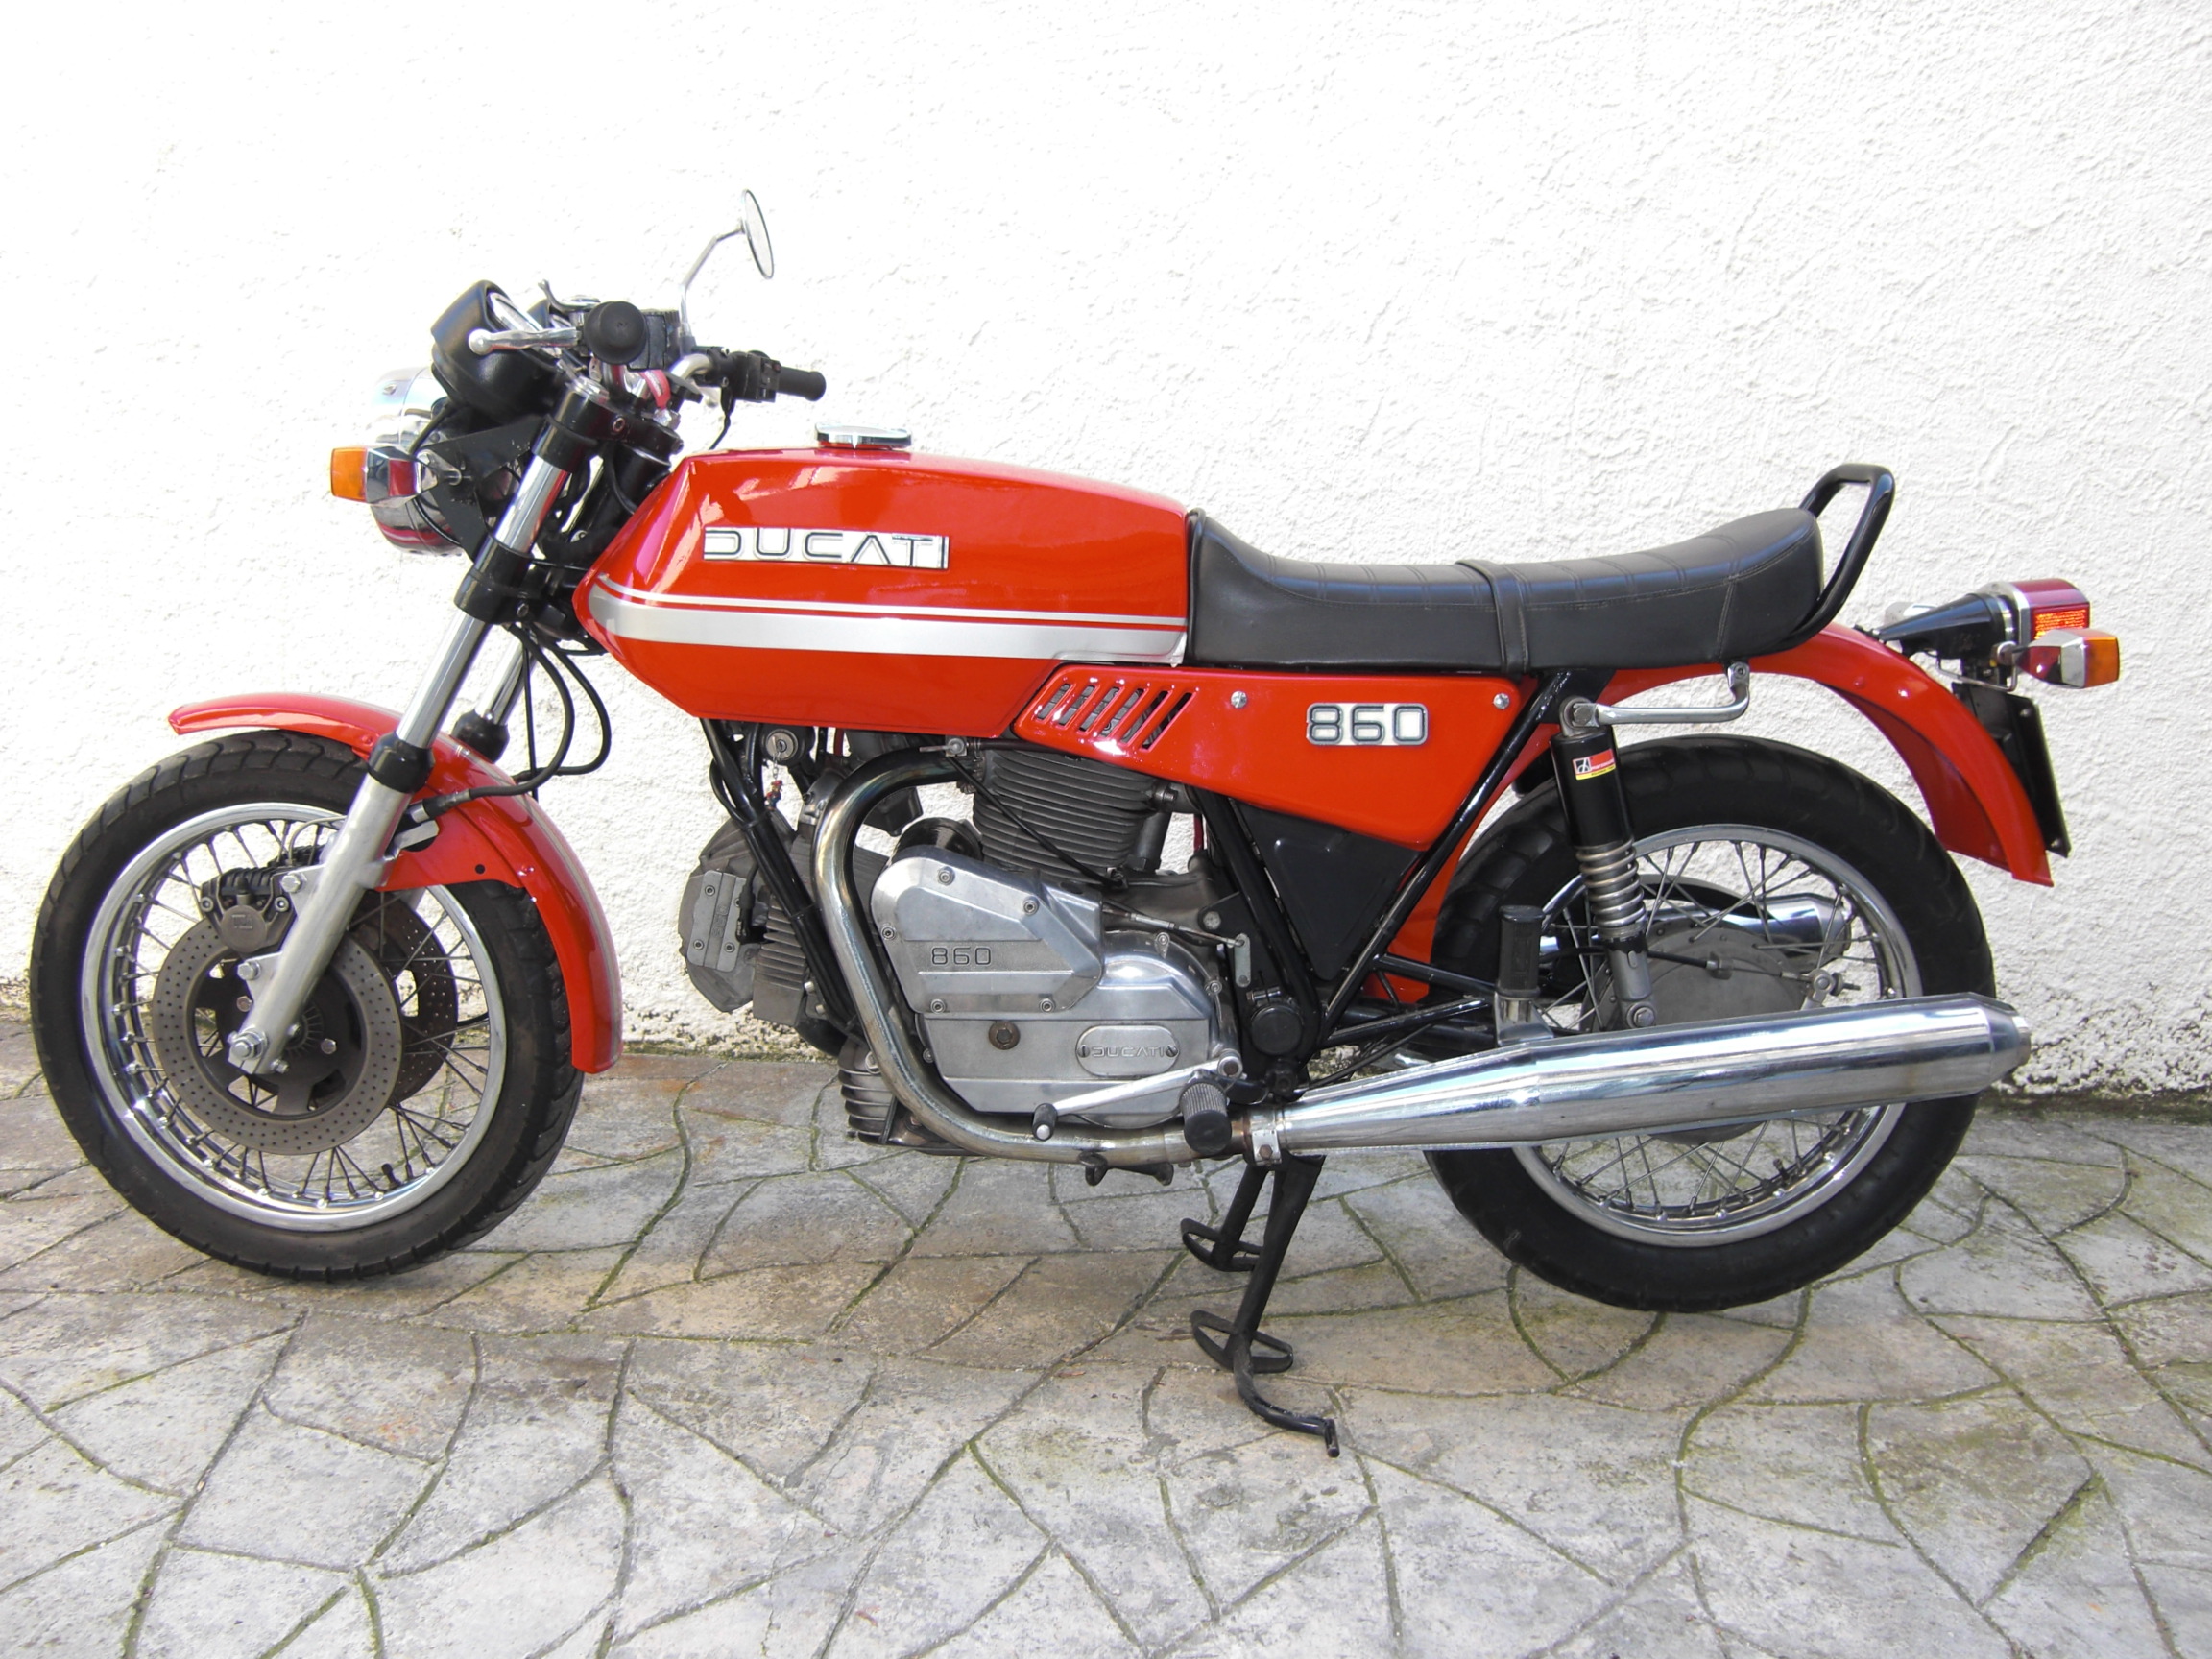 Ducati S 860cc 1975